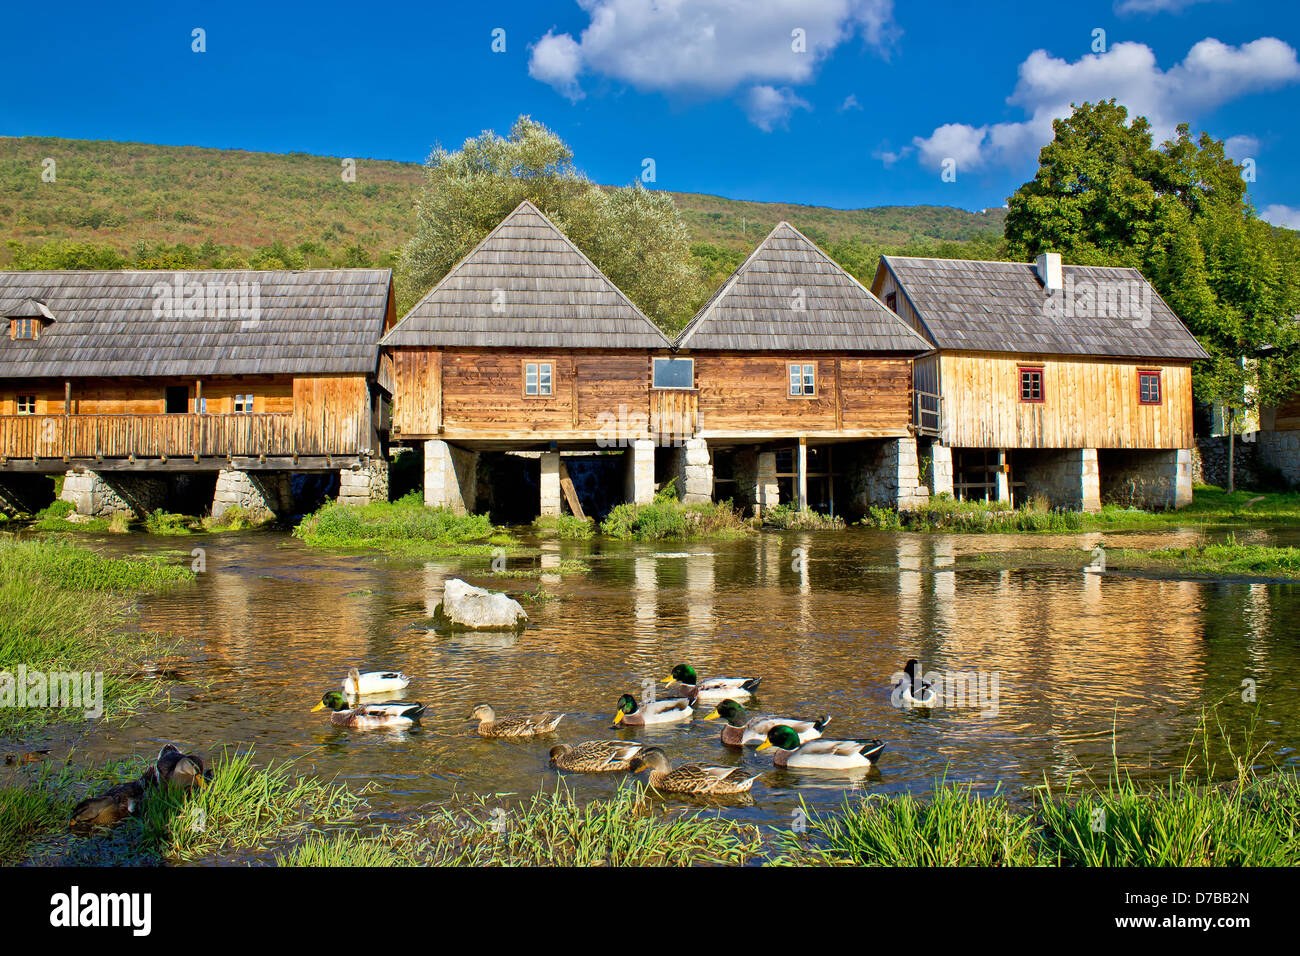 Majerovo vrilo - Source of Gacka river. Lika, Croatia Stock Photo